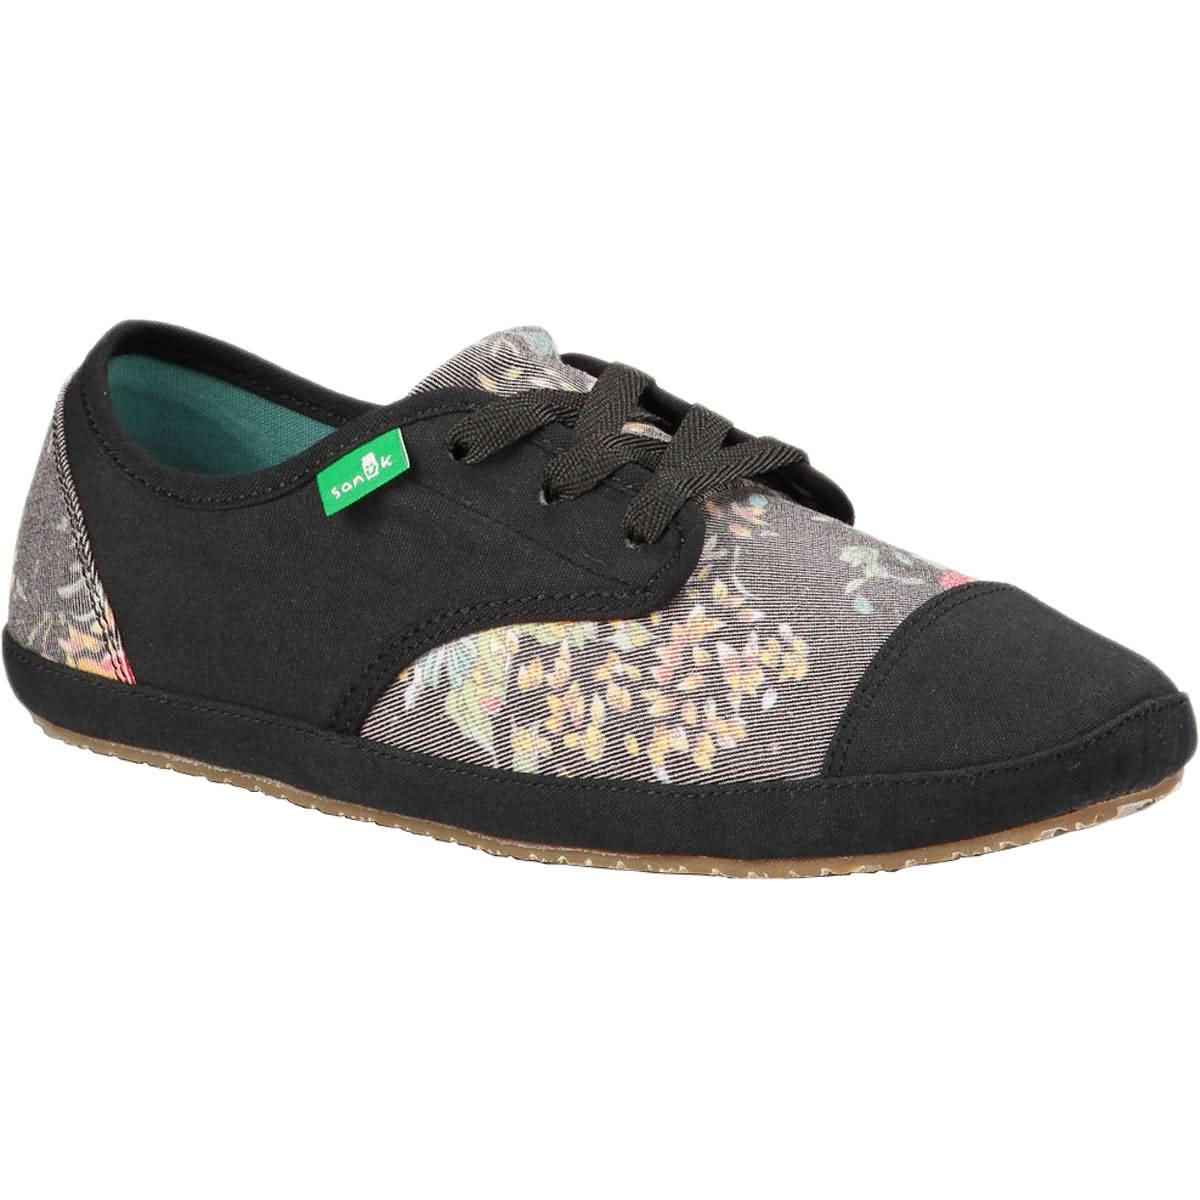 Sanuk Sock Hop Gardenia Women's Shoes Footwear - Black / Floral / 9